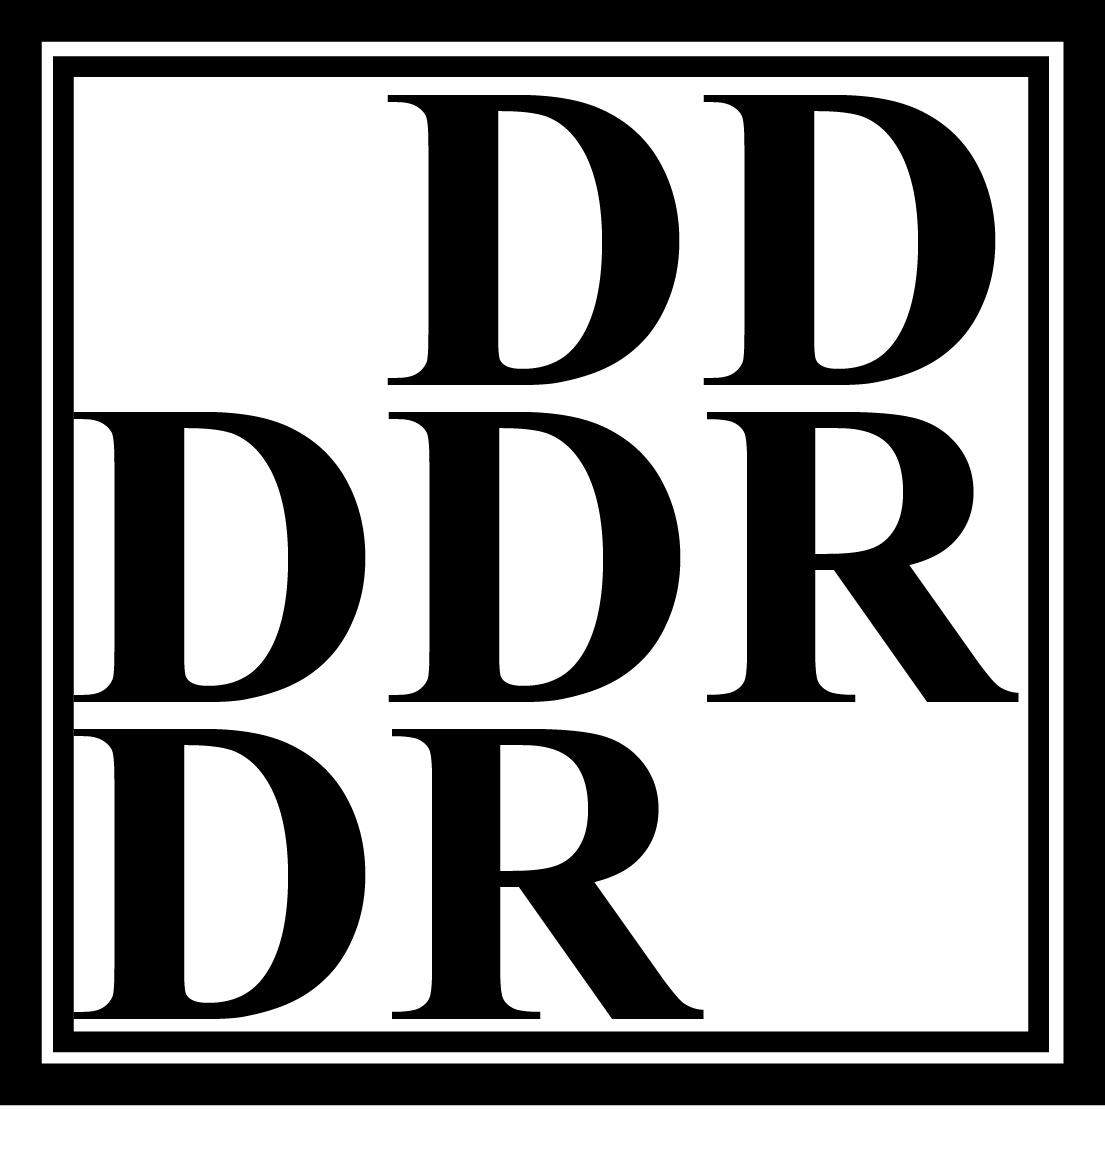 DDR Derek Daniel Reformat Logo Watermark